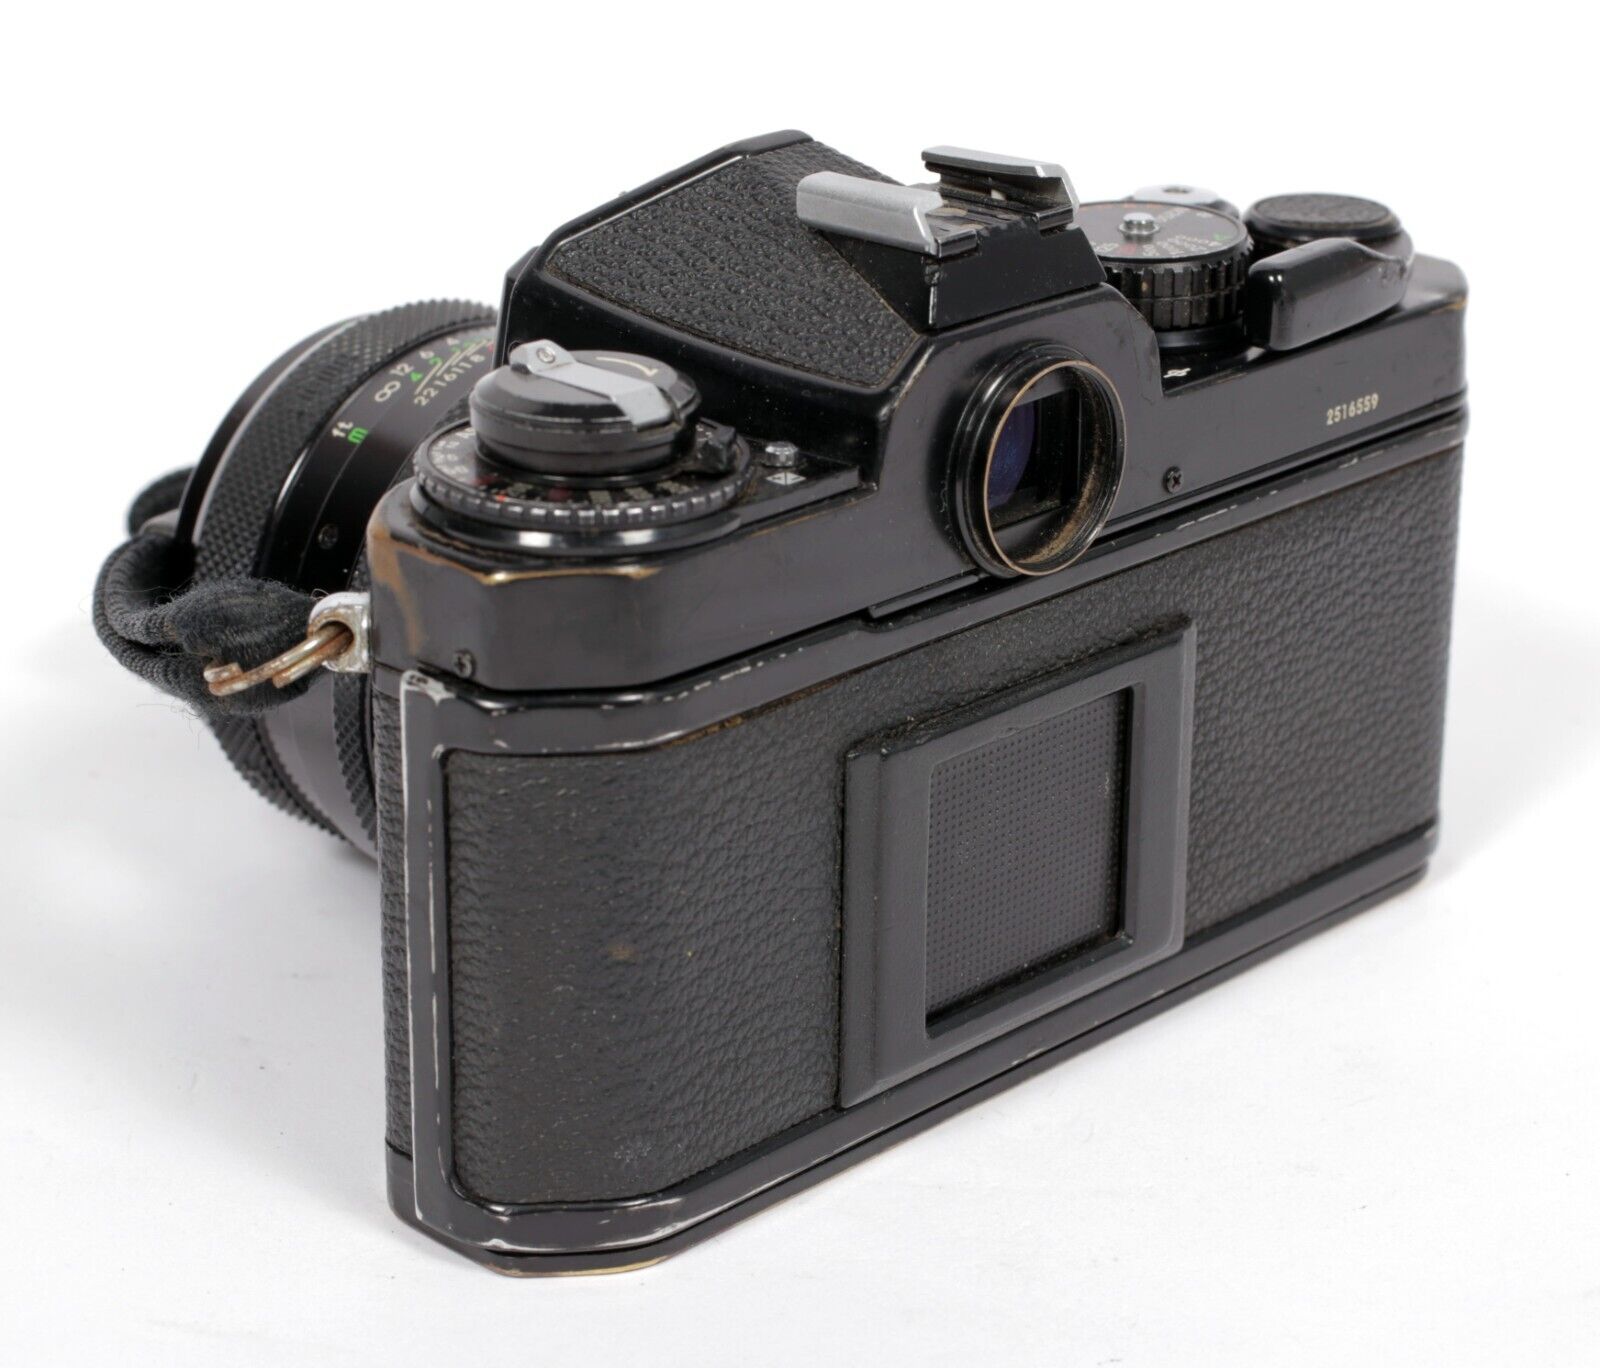 Nikon FE2 35mm SLR Film Camera with Wide angle Sigma MC 28mm F2.8 